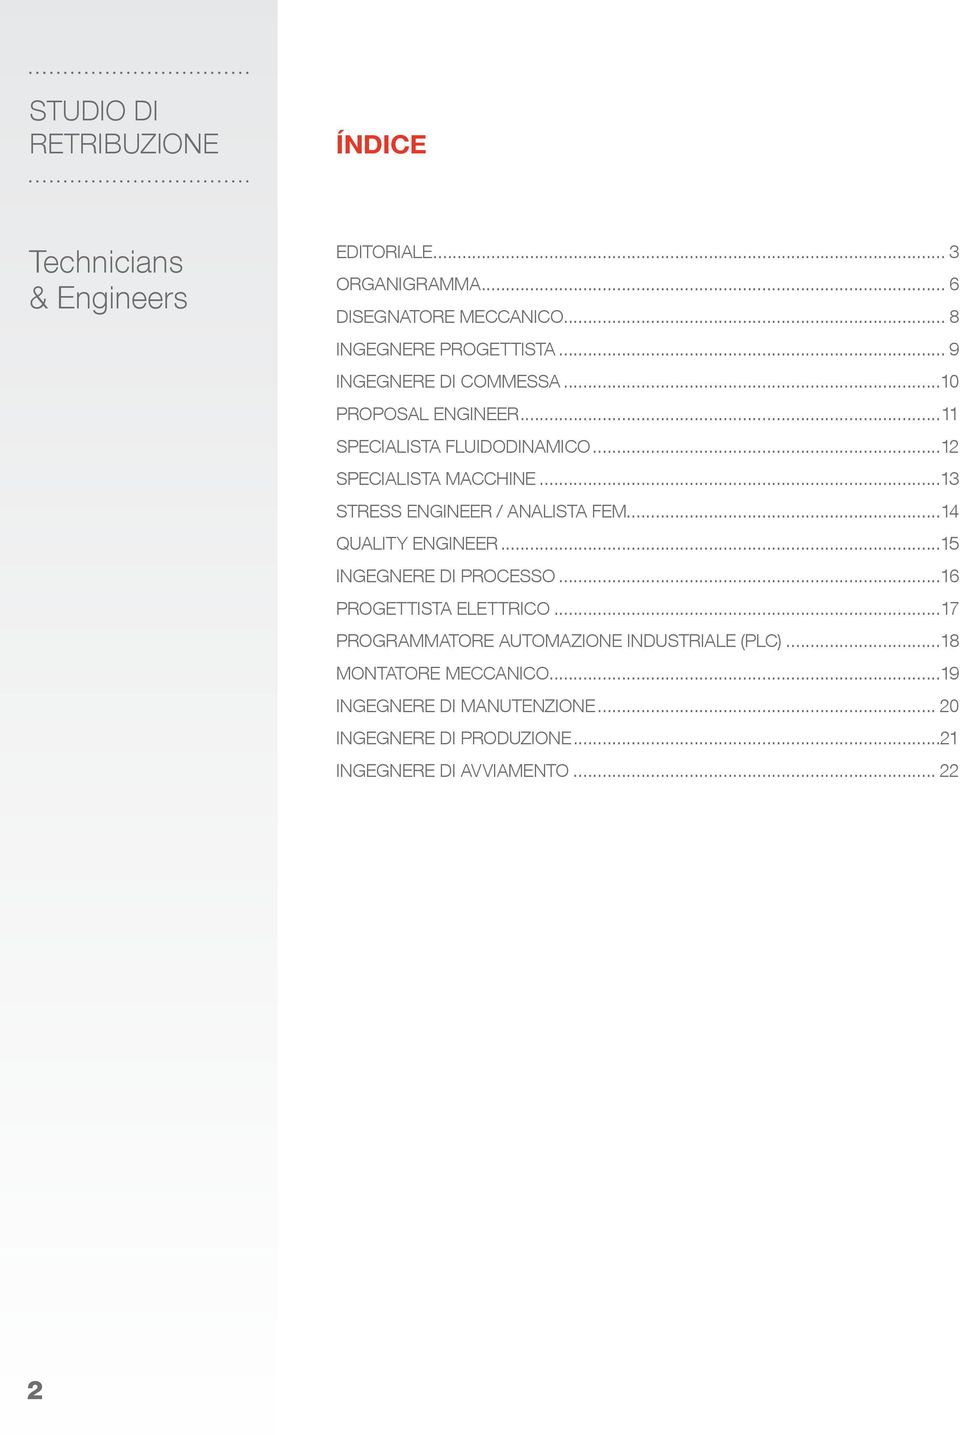 ..12 SPECIALISTA MACCHINE...13 STRESS ENGINEER / ANALISTA FEM...14 QUALITY ENGINEER...15 INGEGNERE DI PROCESSO.